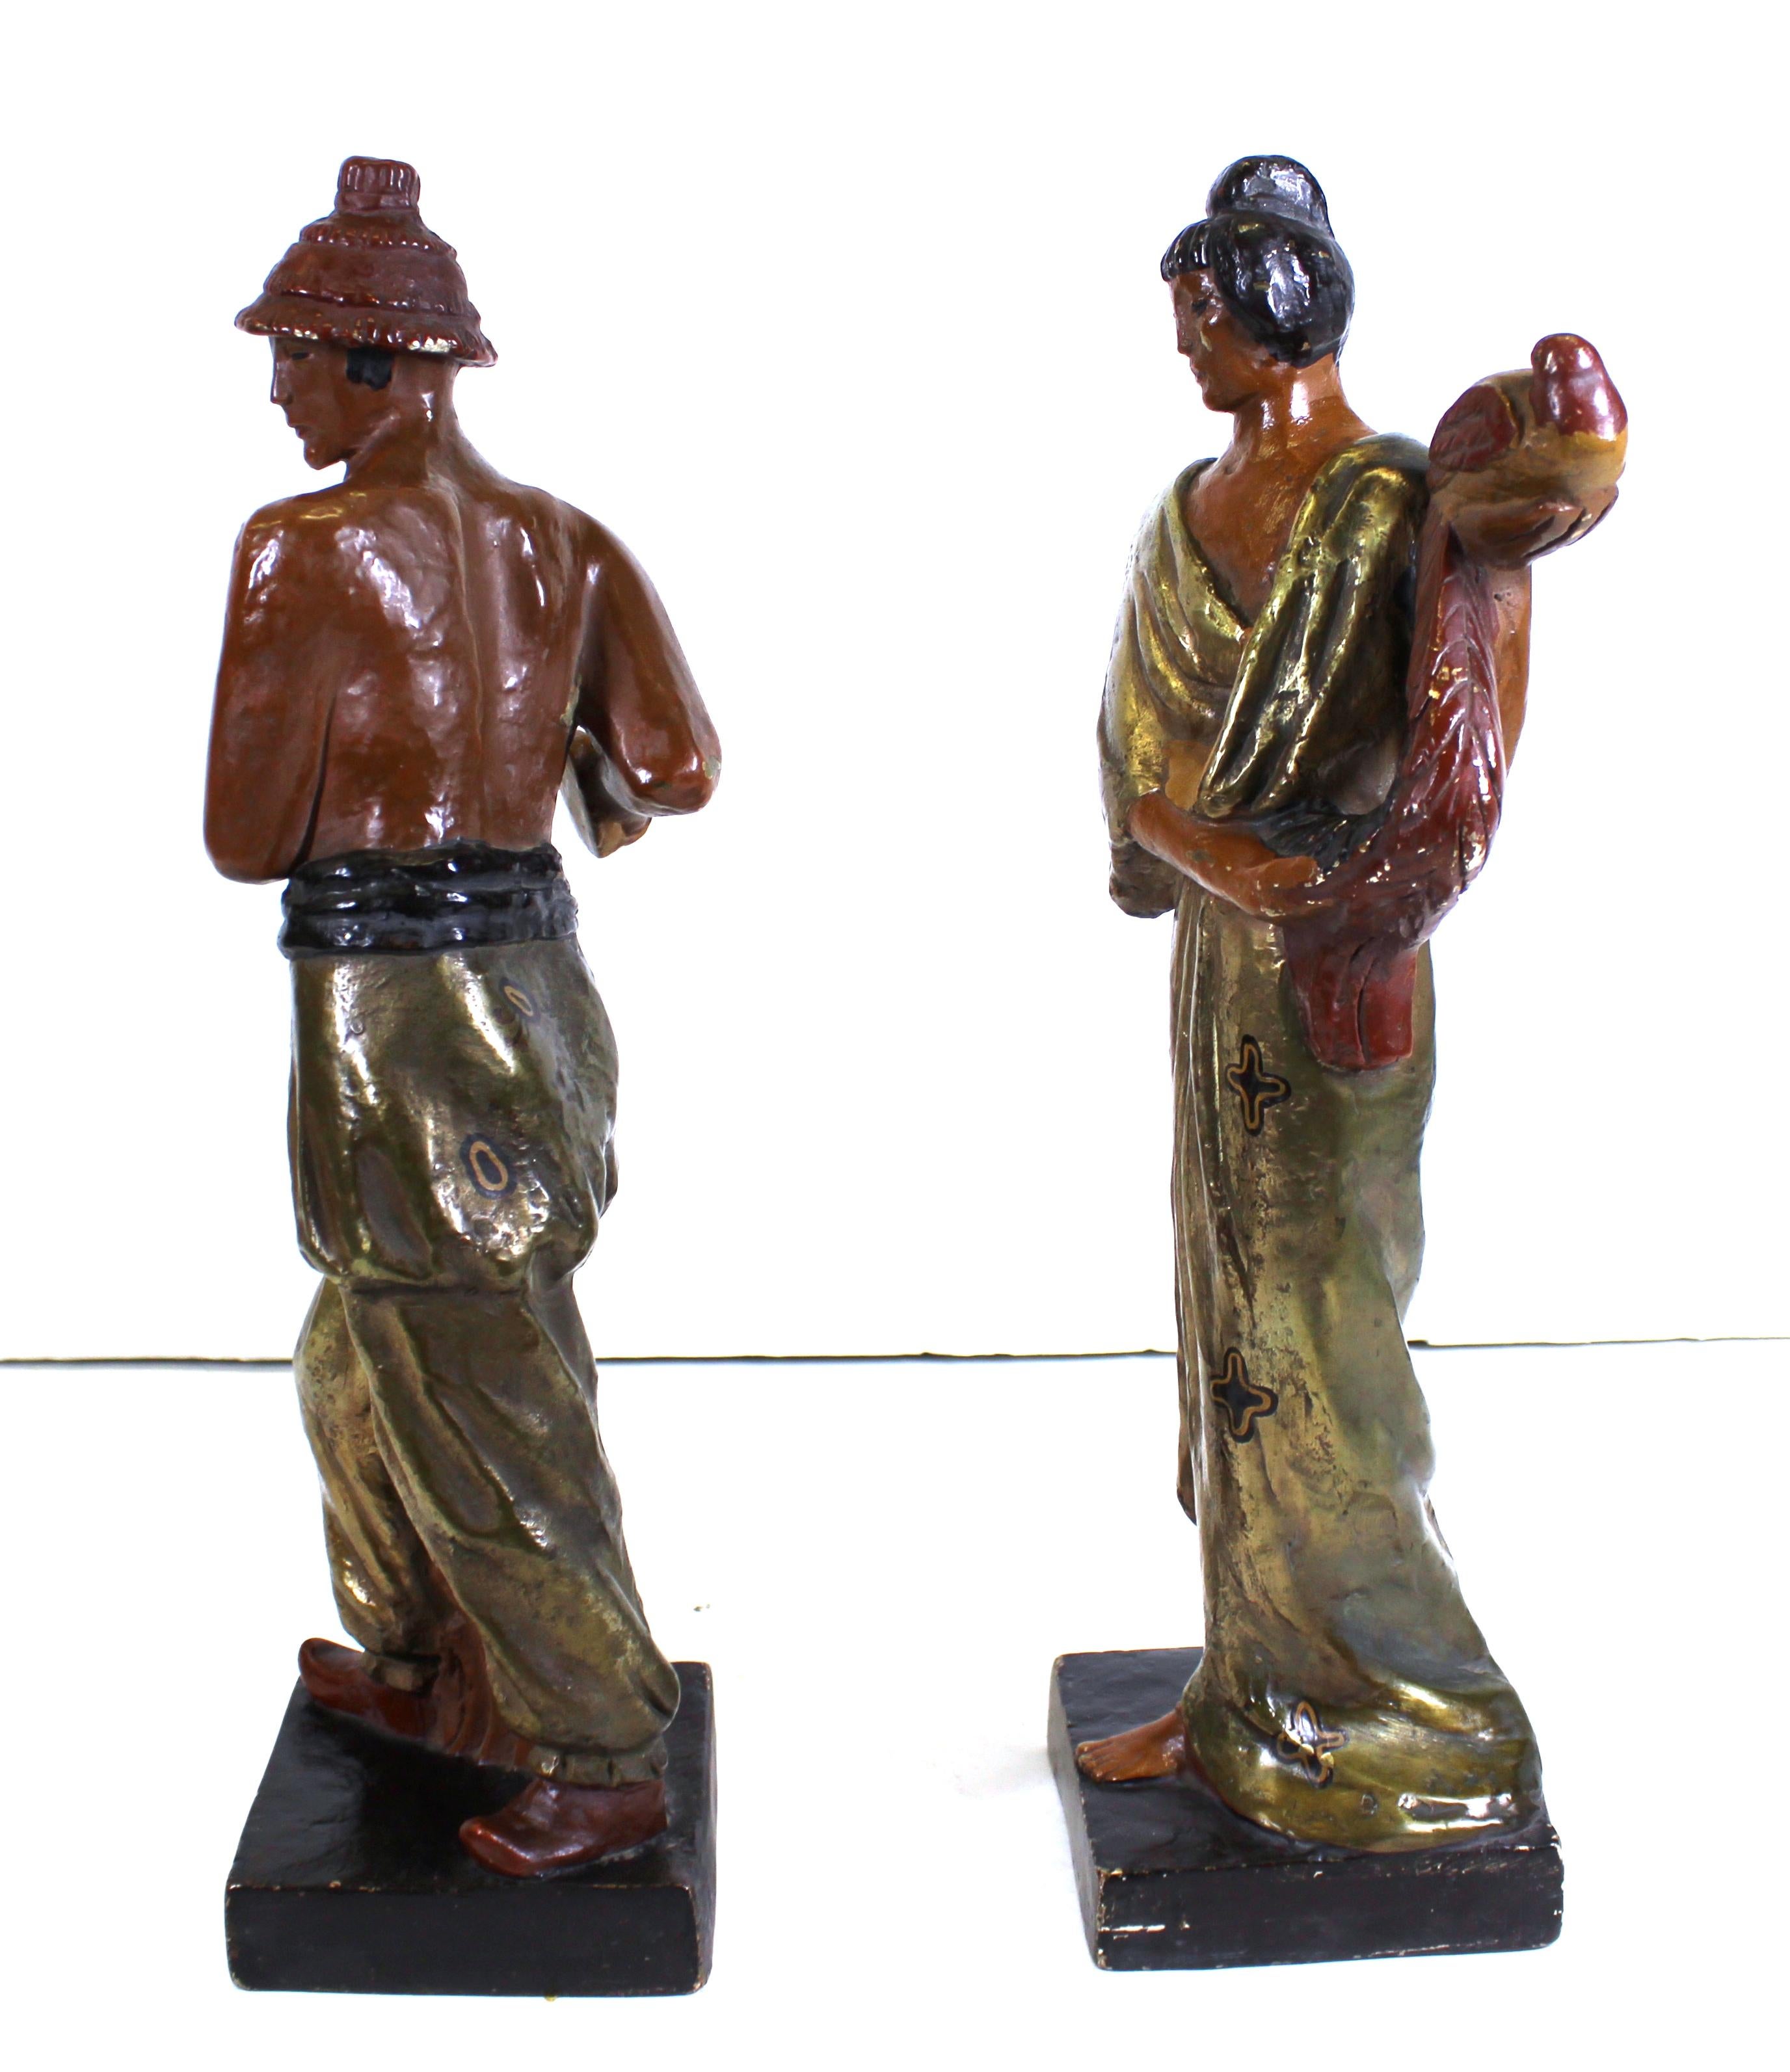 American Kupur Art Deco Japonesque Copper-Clad Terracotta Sculptures